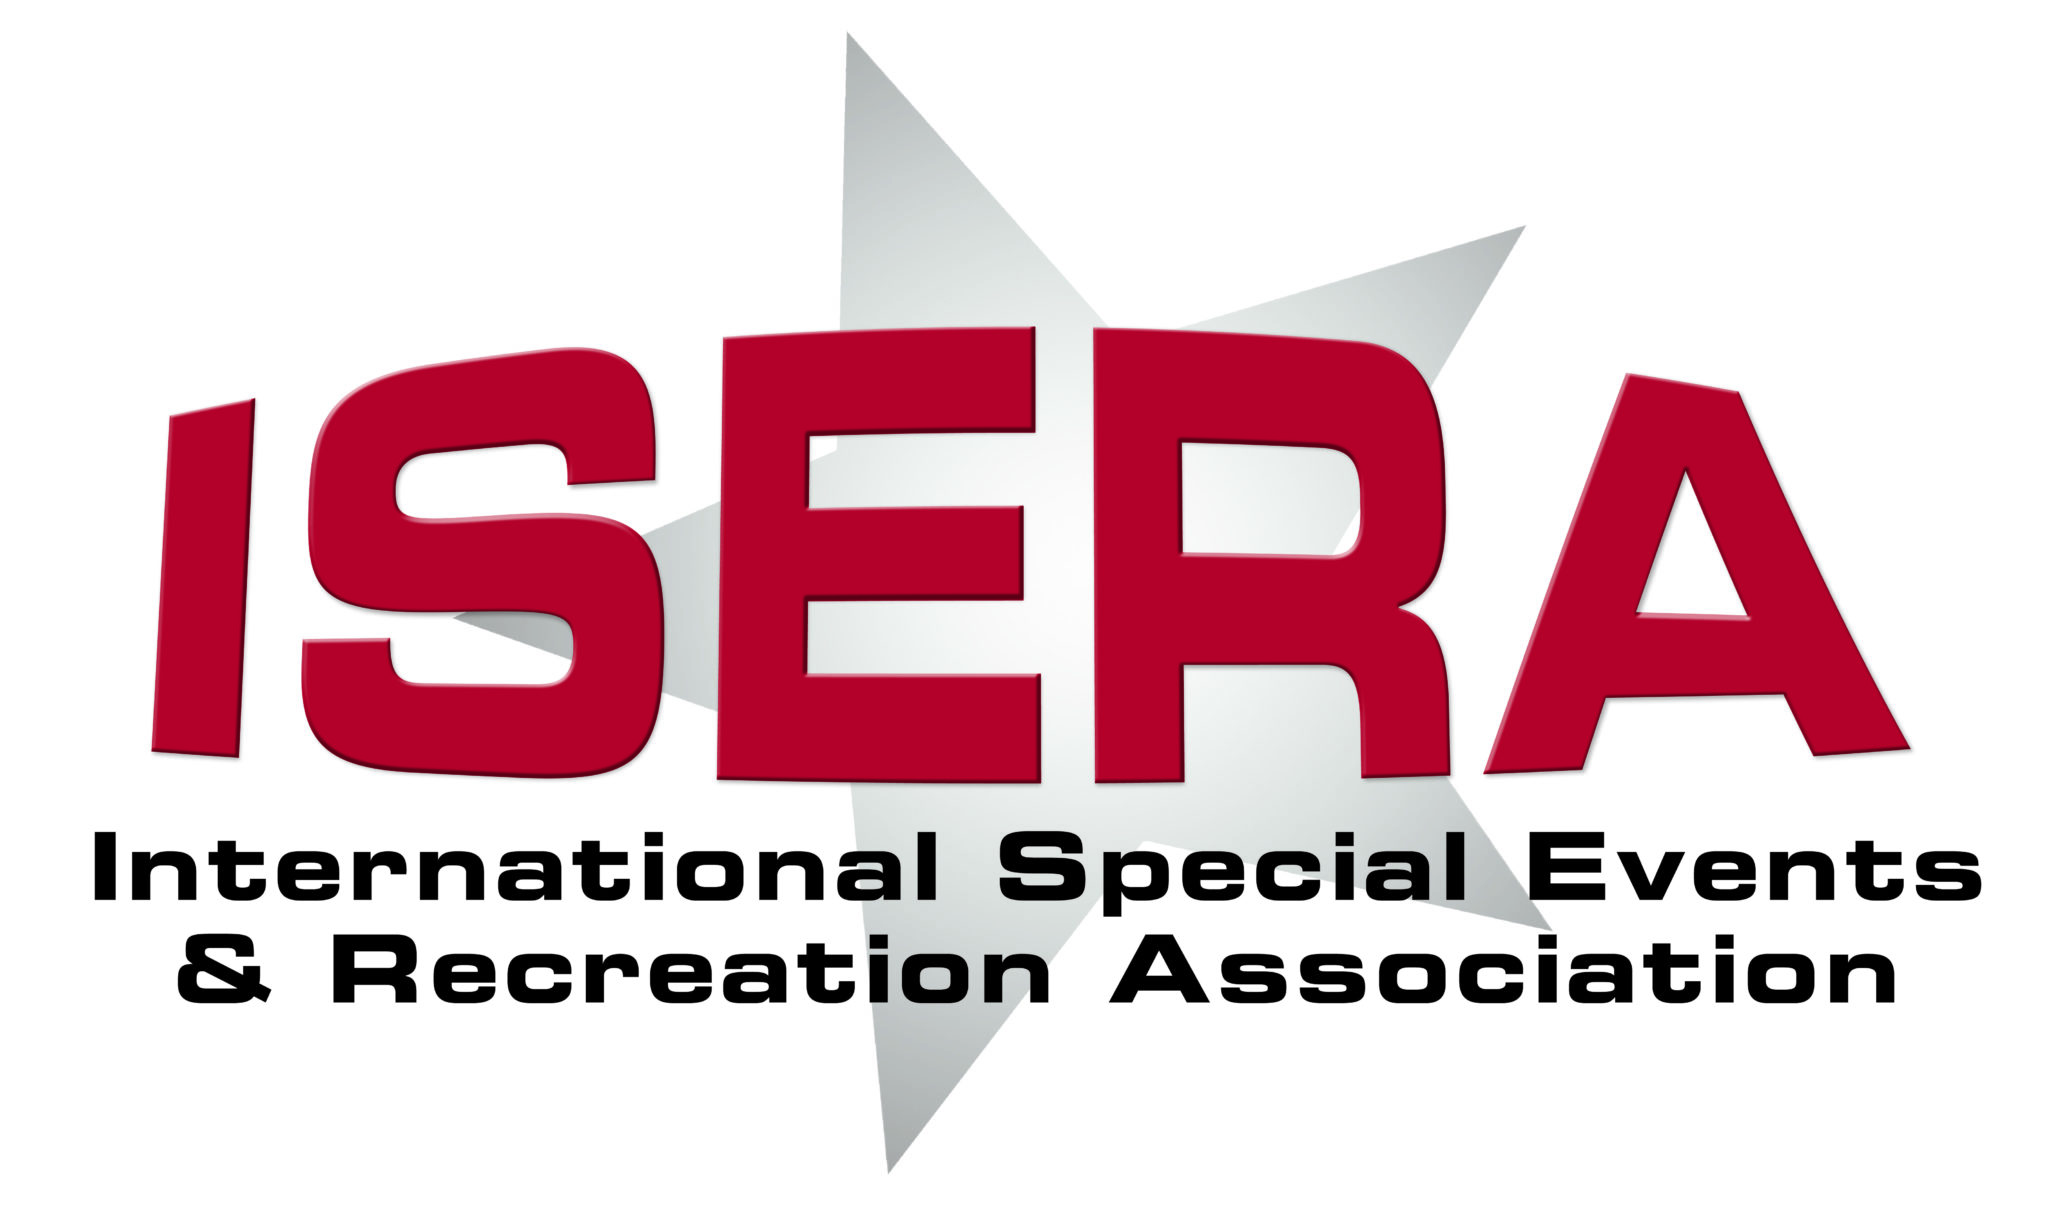 The International Special Events & Recreation Association (ISERA)